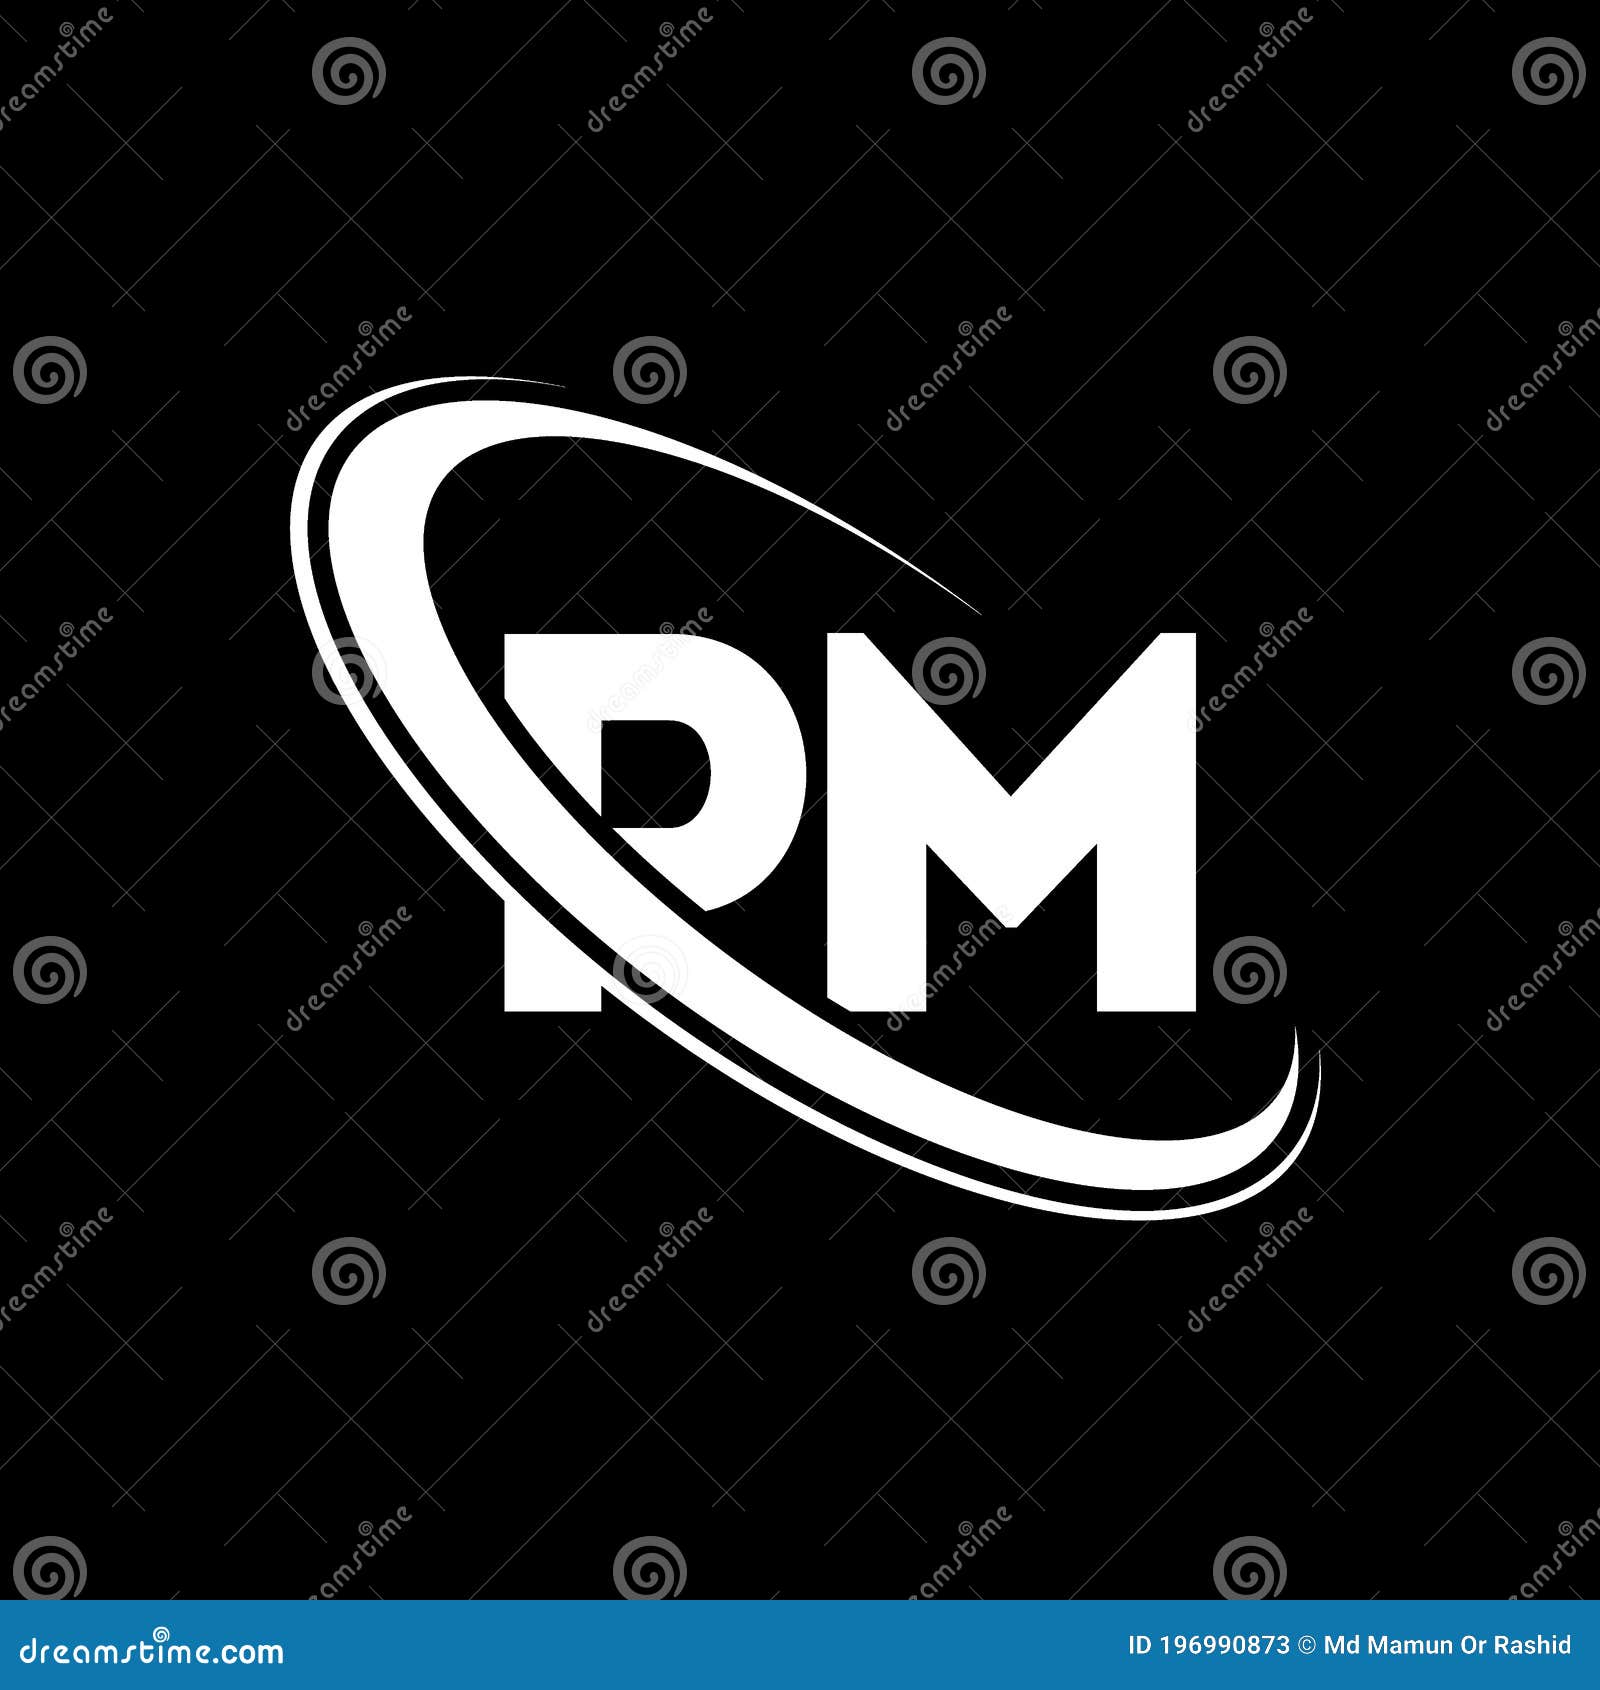 PM Logo. P M Design. White PM Letter. PM/P M Letter Logo Design